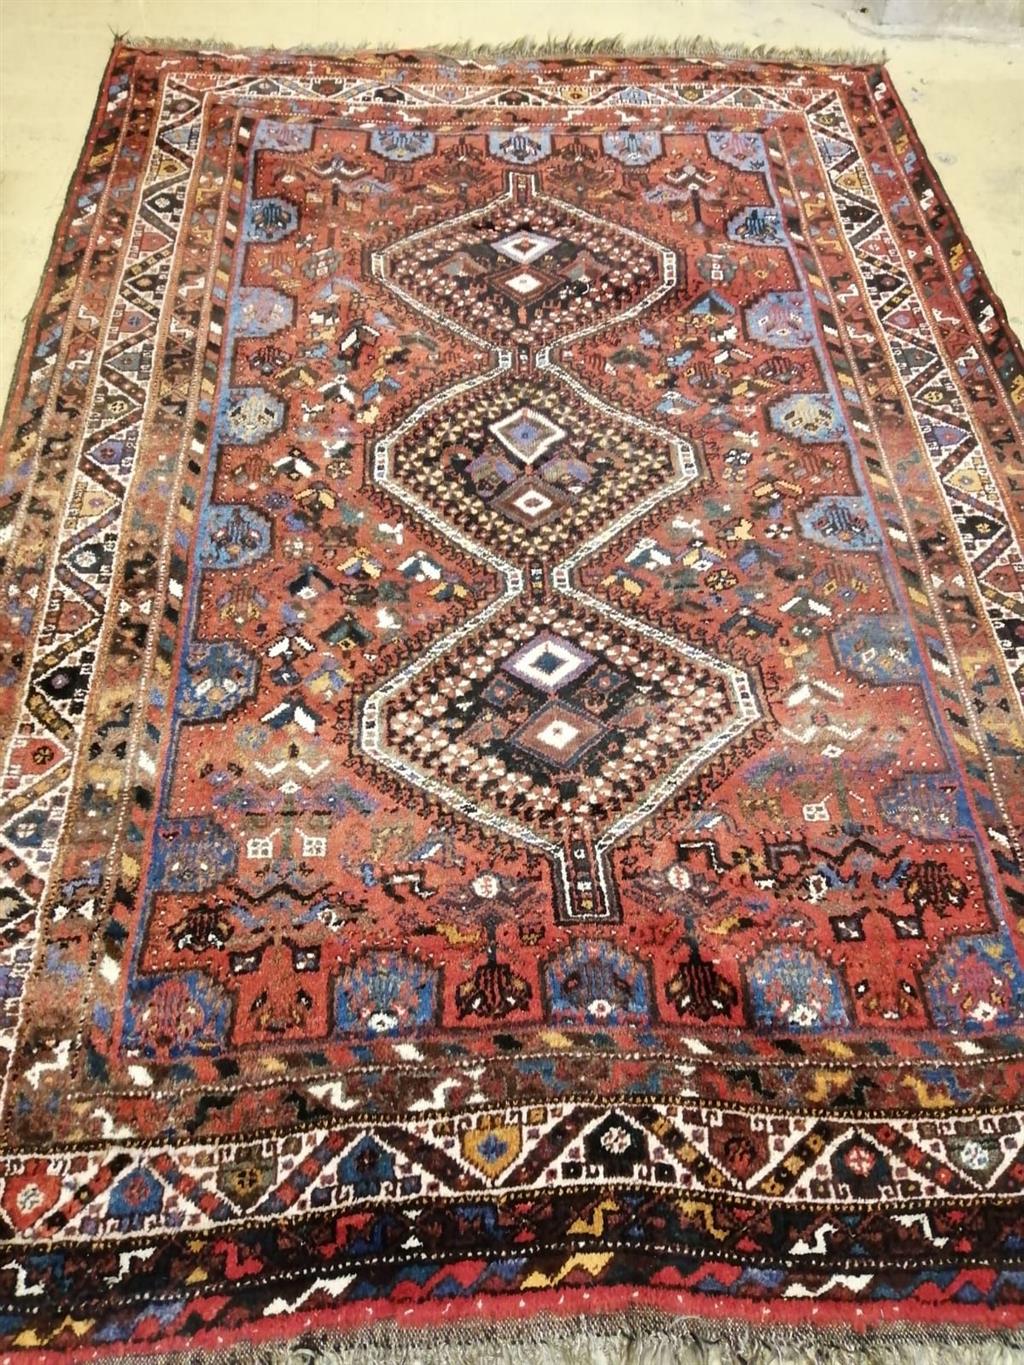 A Hamadan carpet, 270 x 190cm